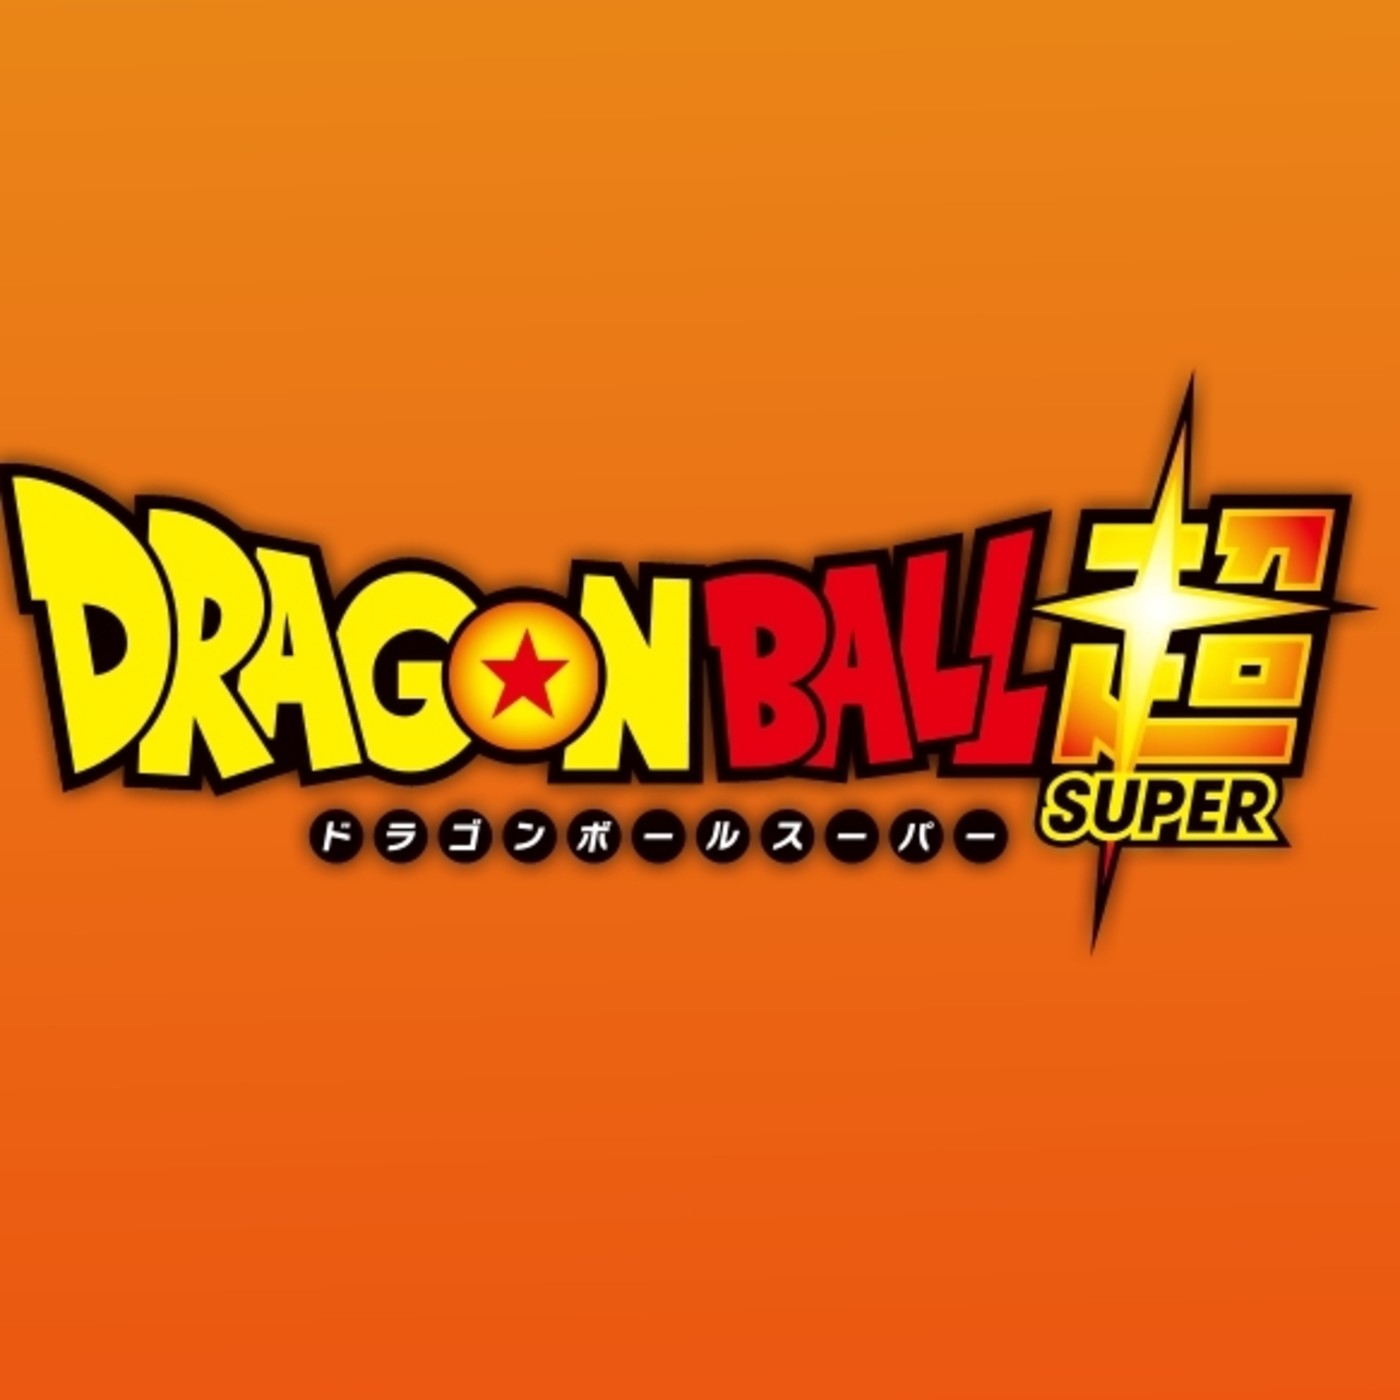 Gambatte Podcast | 'Dragon Ball Super': Ep. 19, 20 y 21 en castellano